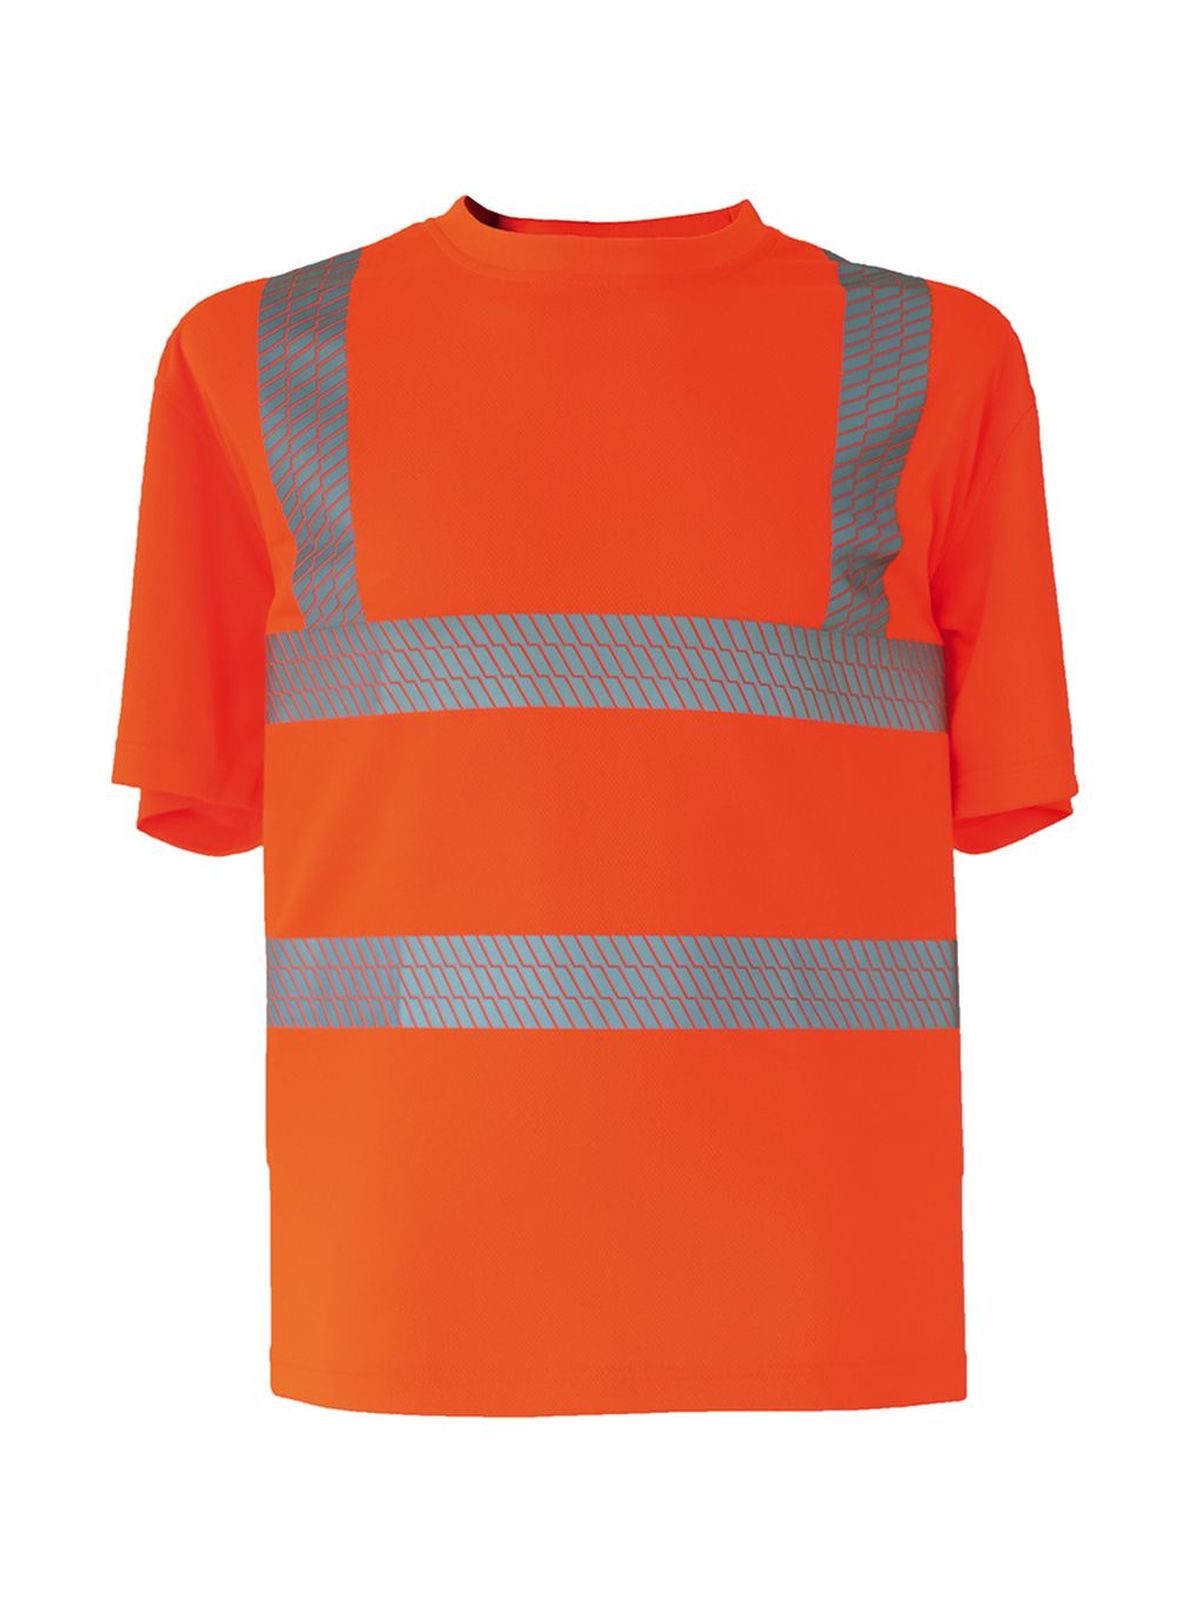 broken-reflex-t-shirt-orange.webp